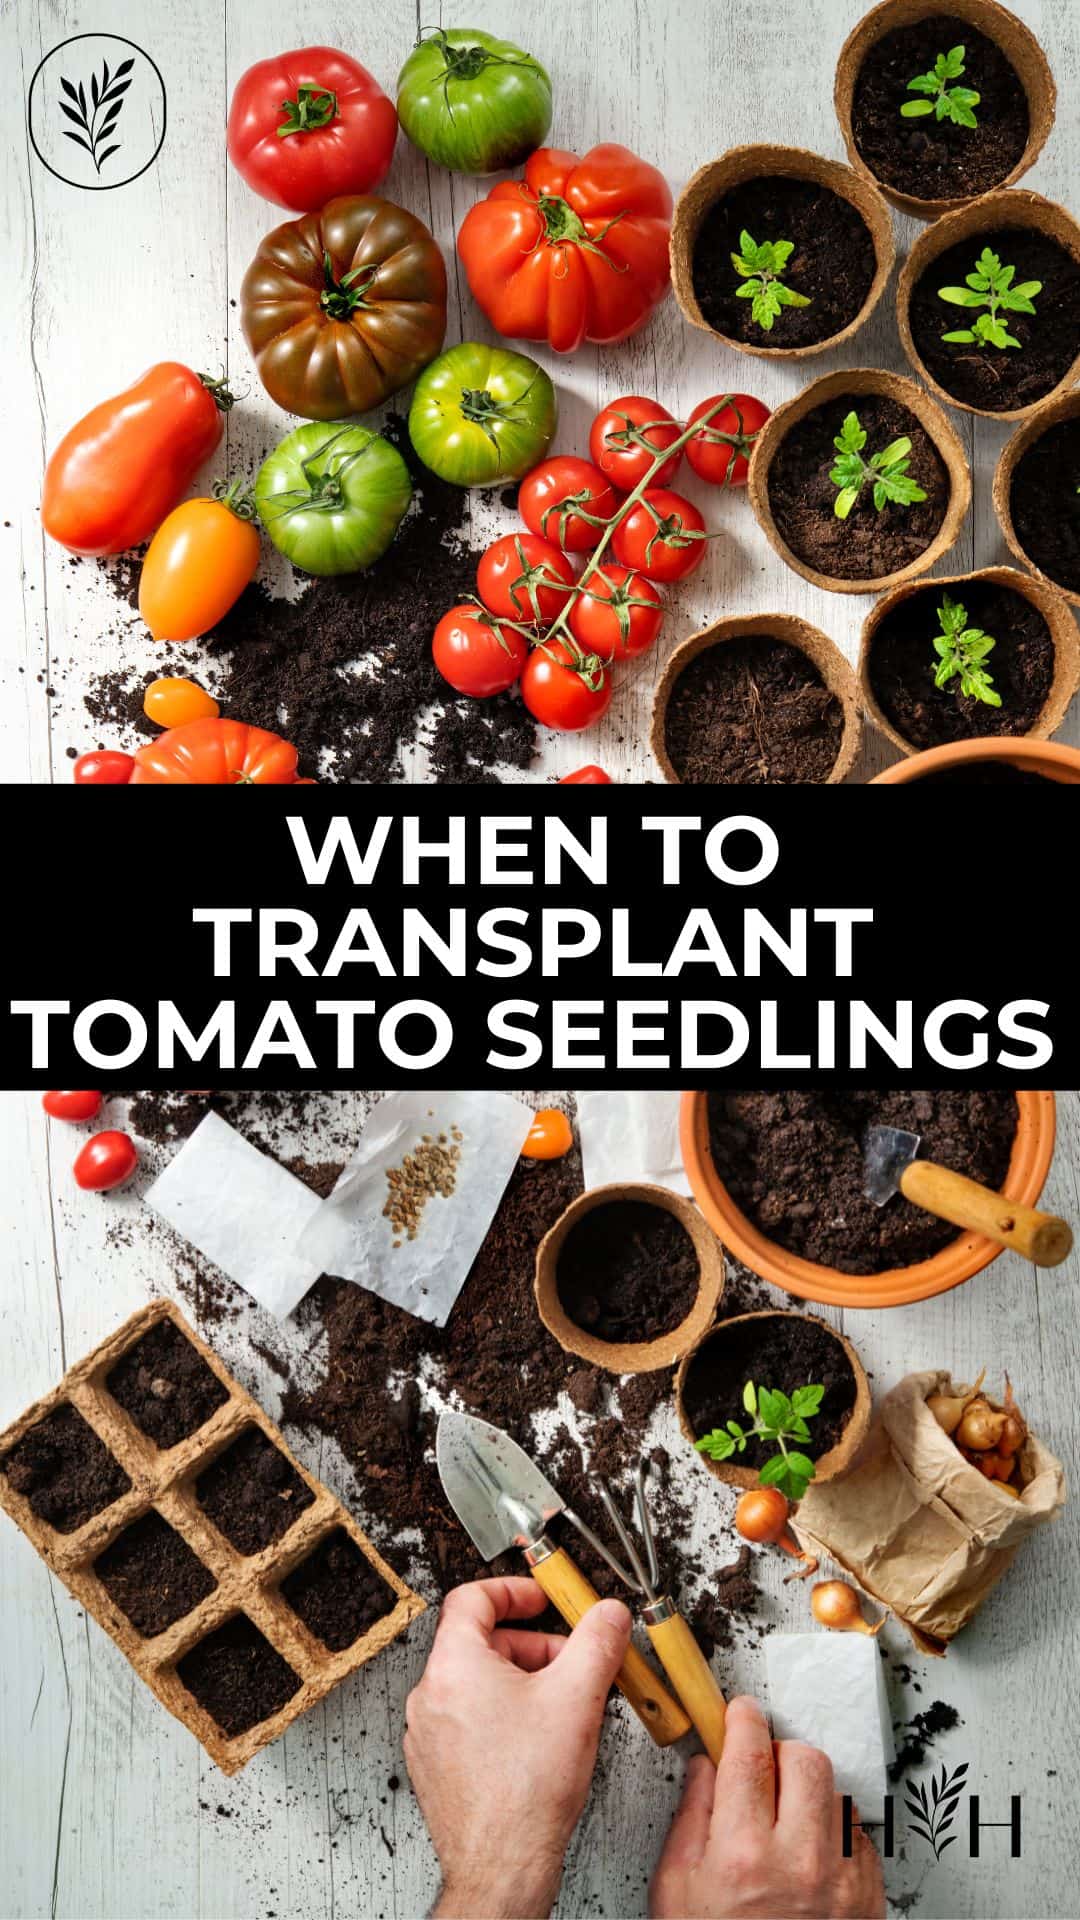 When to transplant tomato seedlings via @home4theharvest